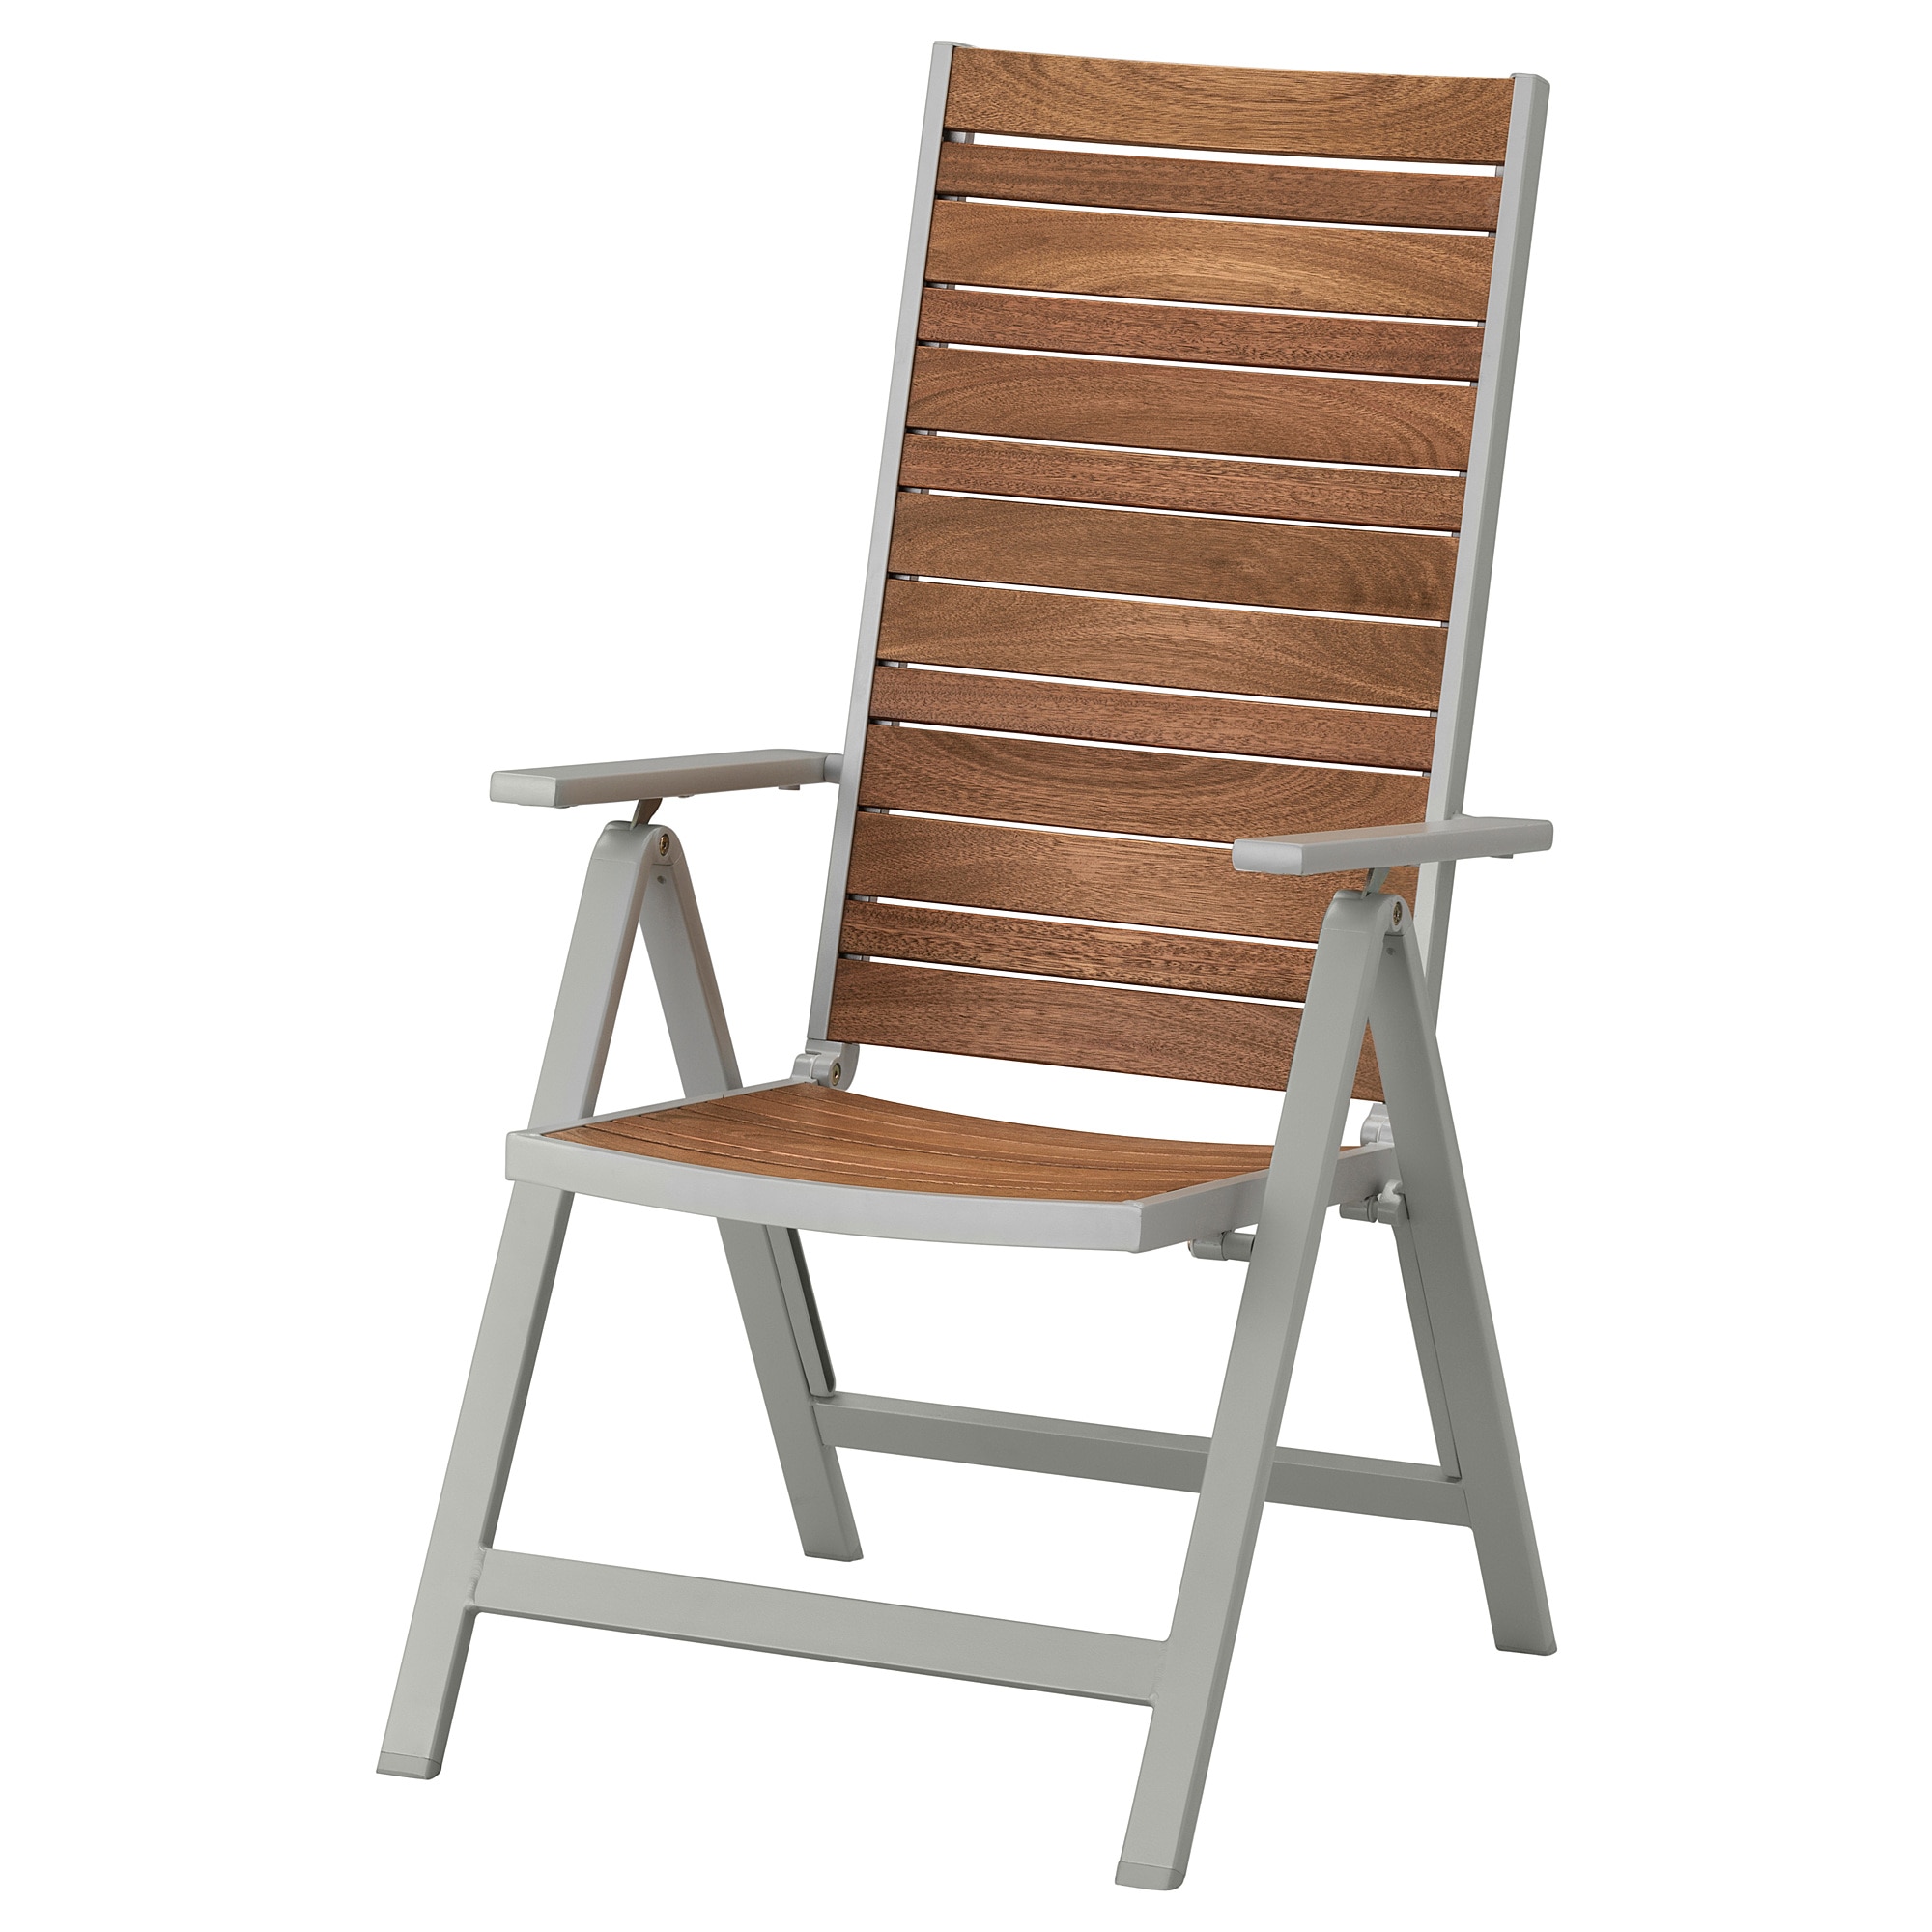 Själland Ikea Outdoor Dining Chairs, Outdoor Wood Chairs Ikea